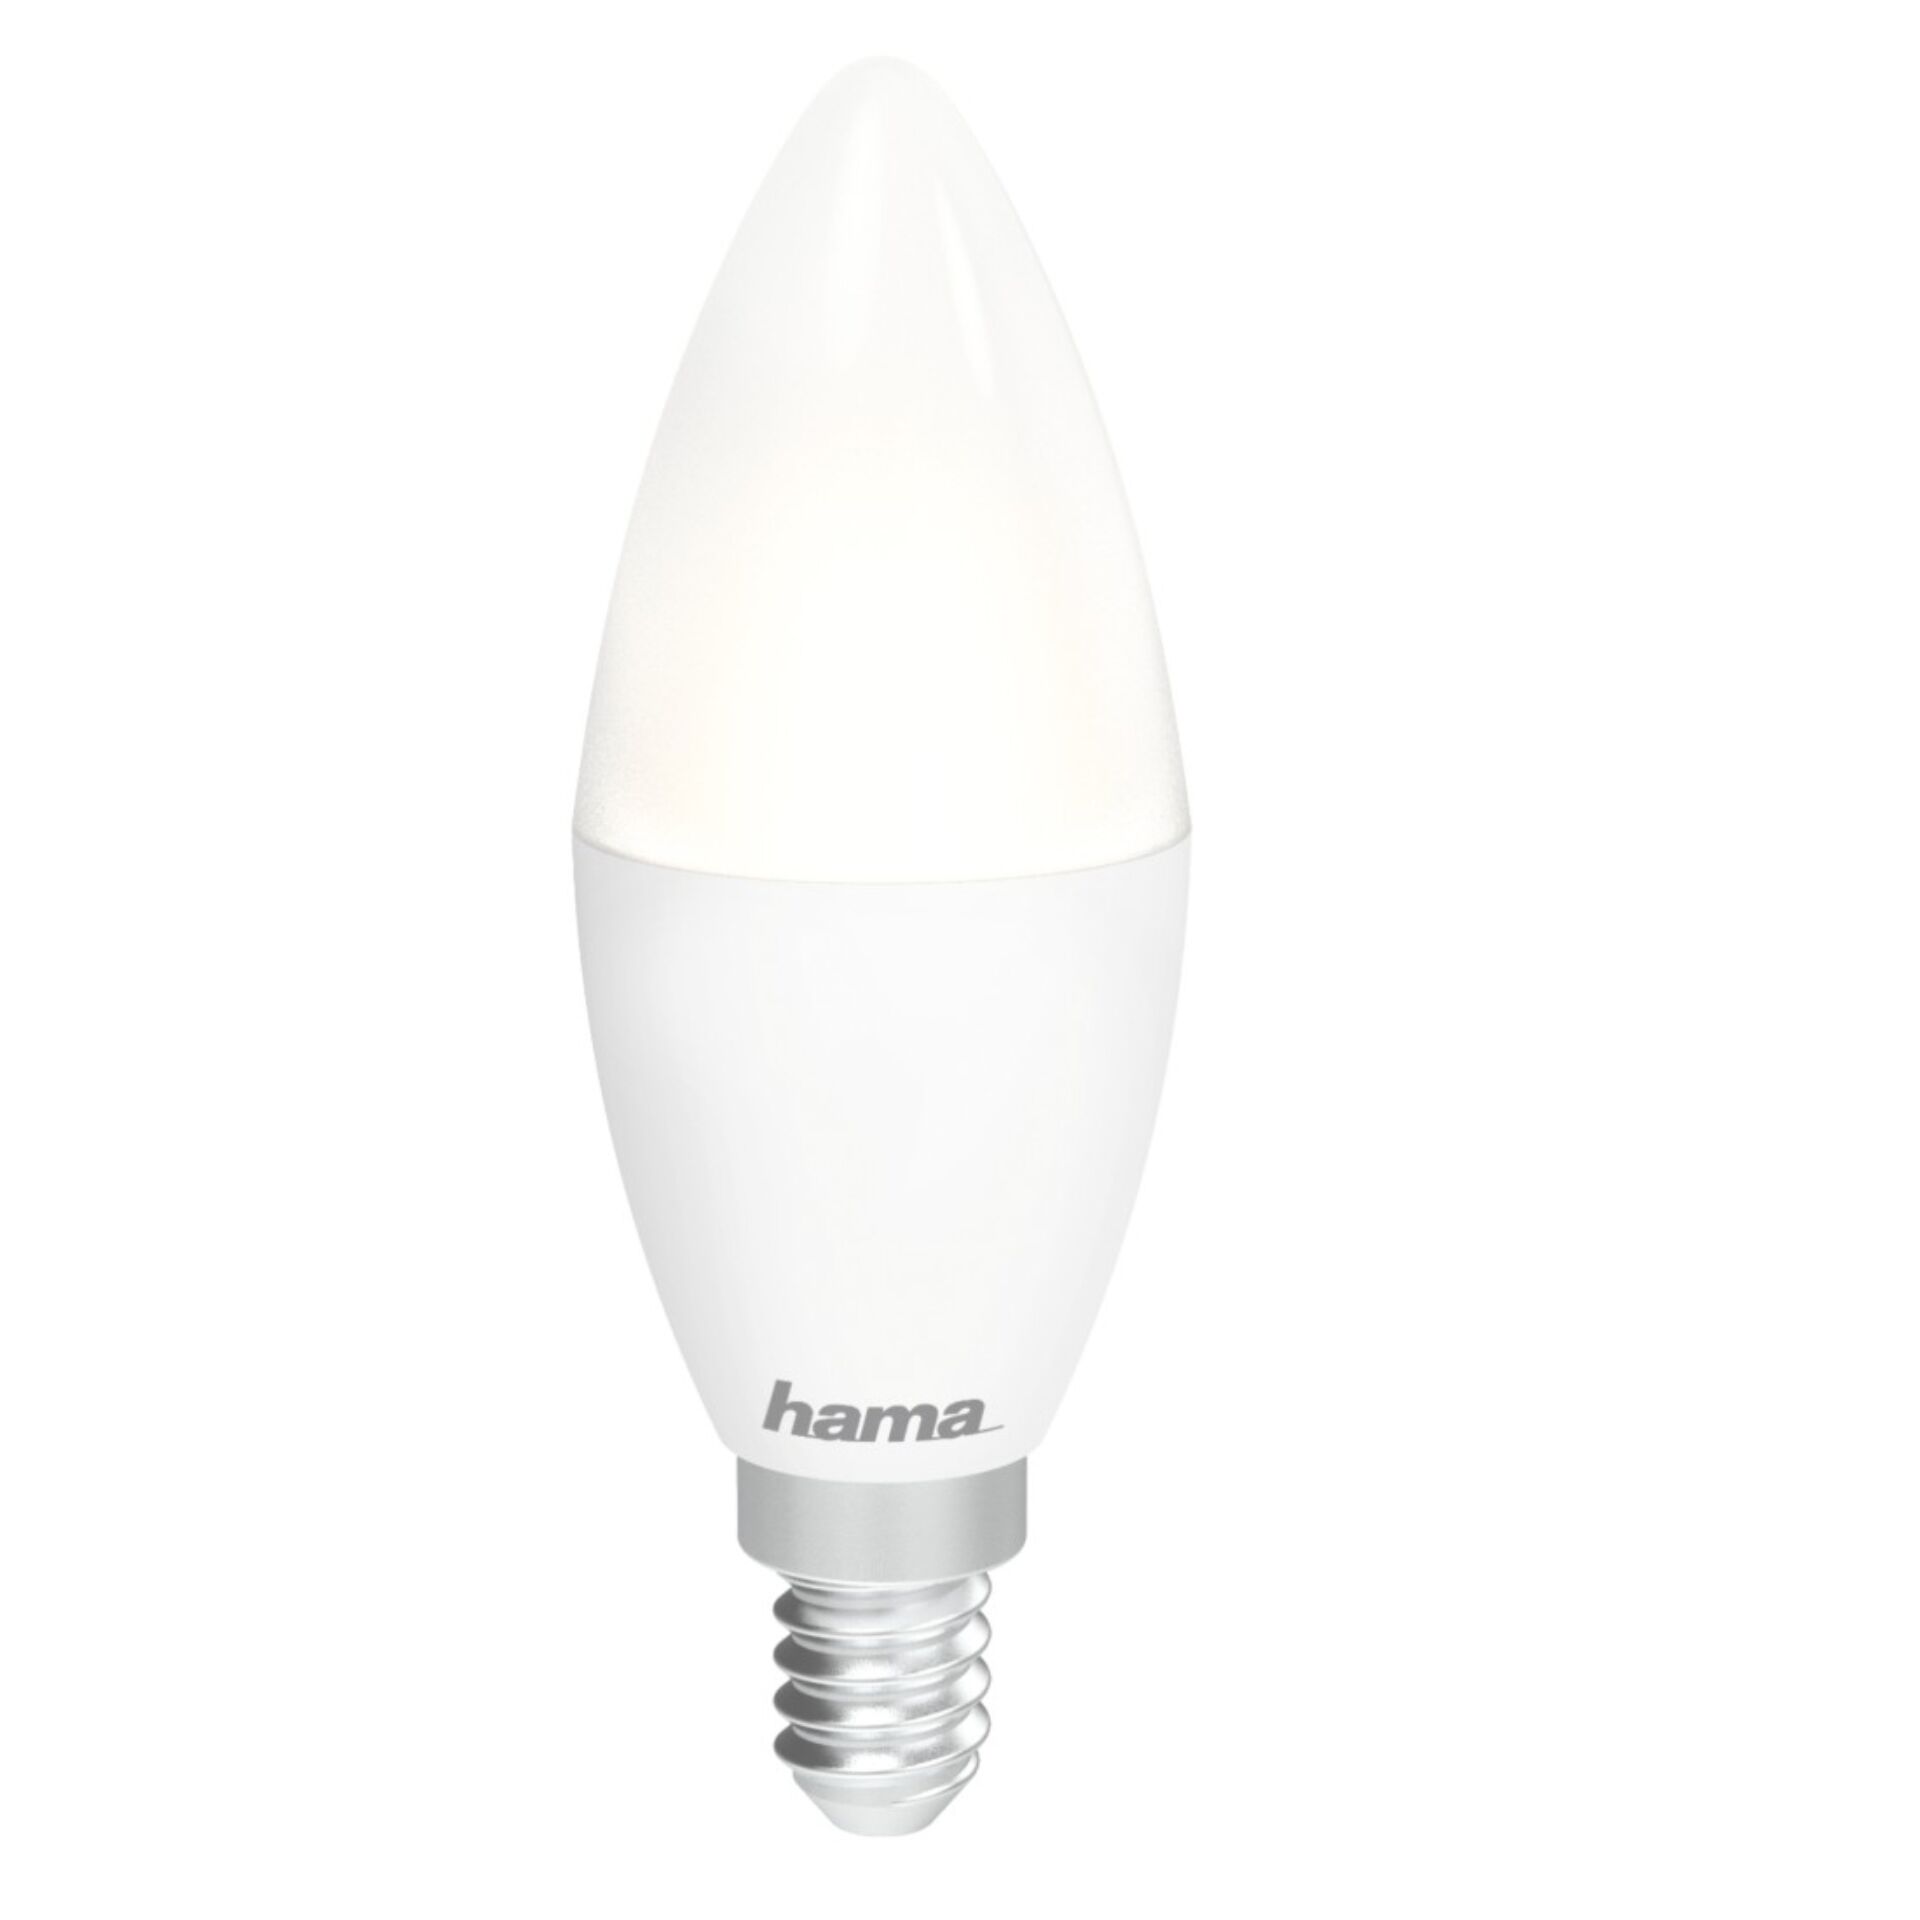 Hama 00176602 energy-saving lamp Tageslicht, Variabel, Warmweiß 5,5 W E14